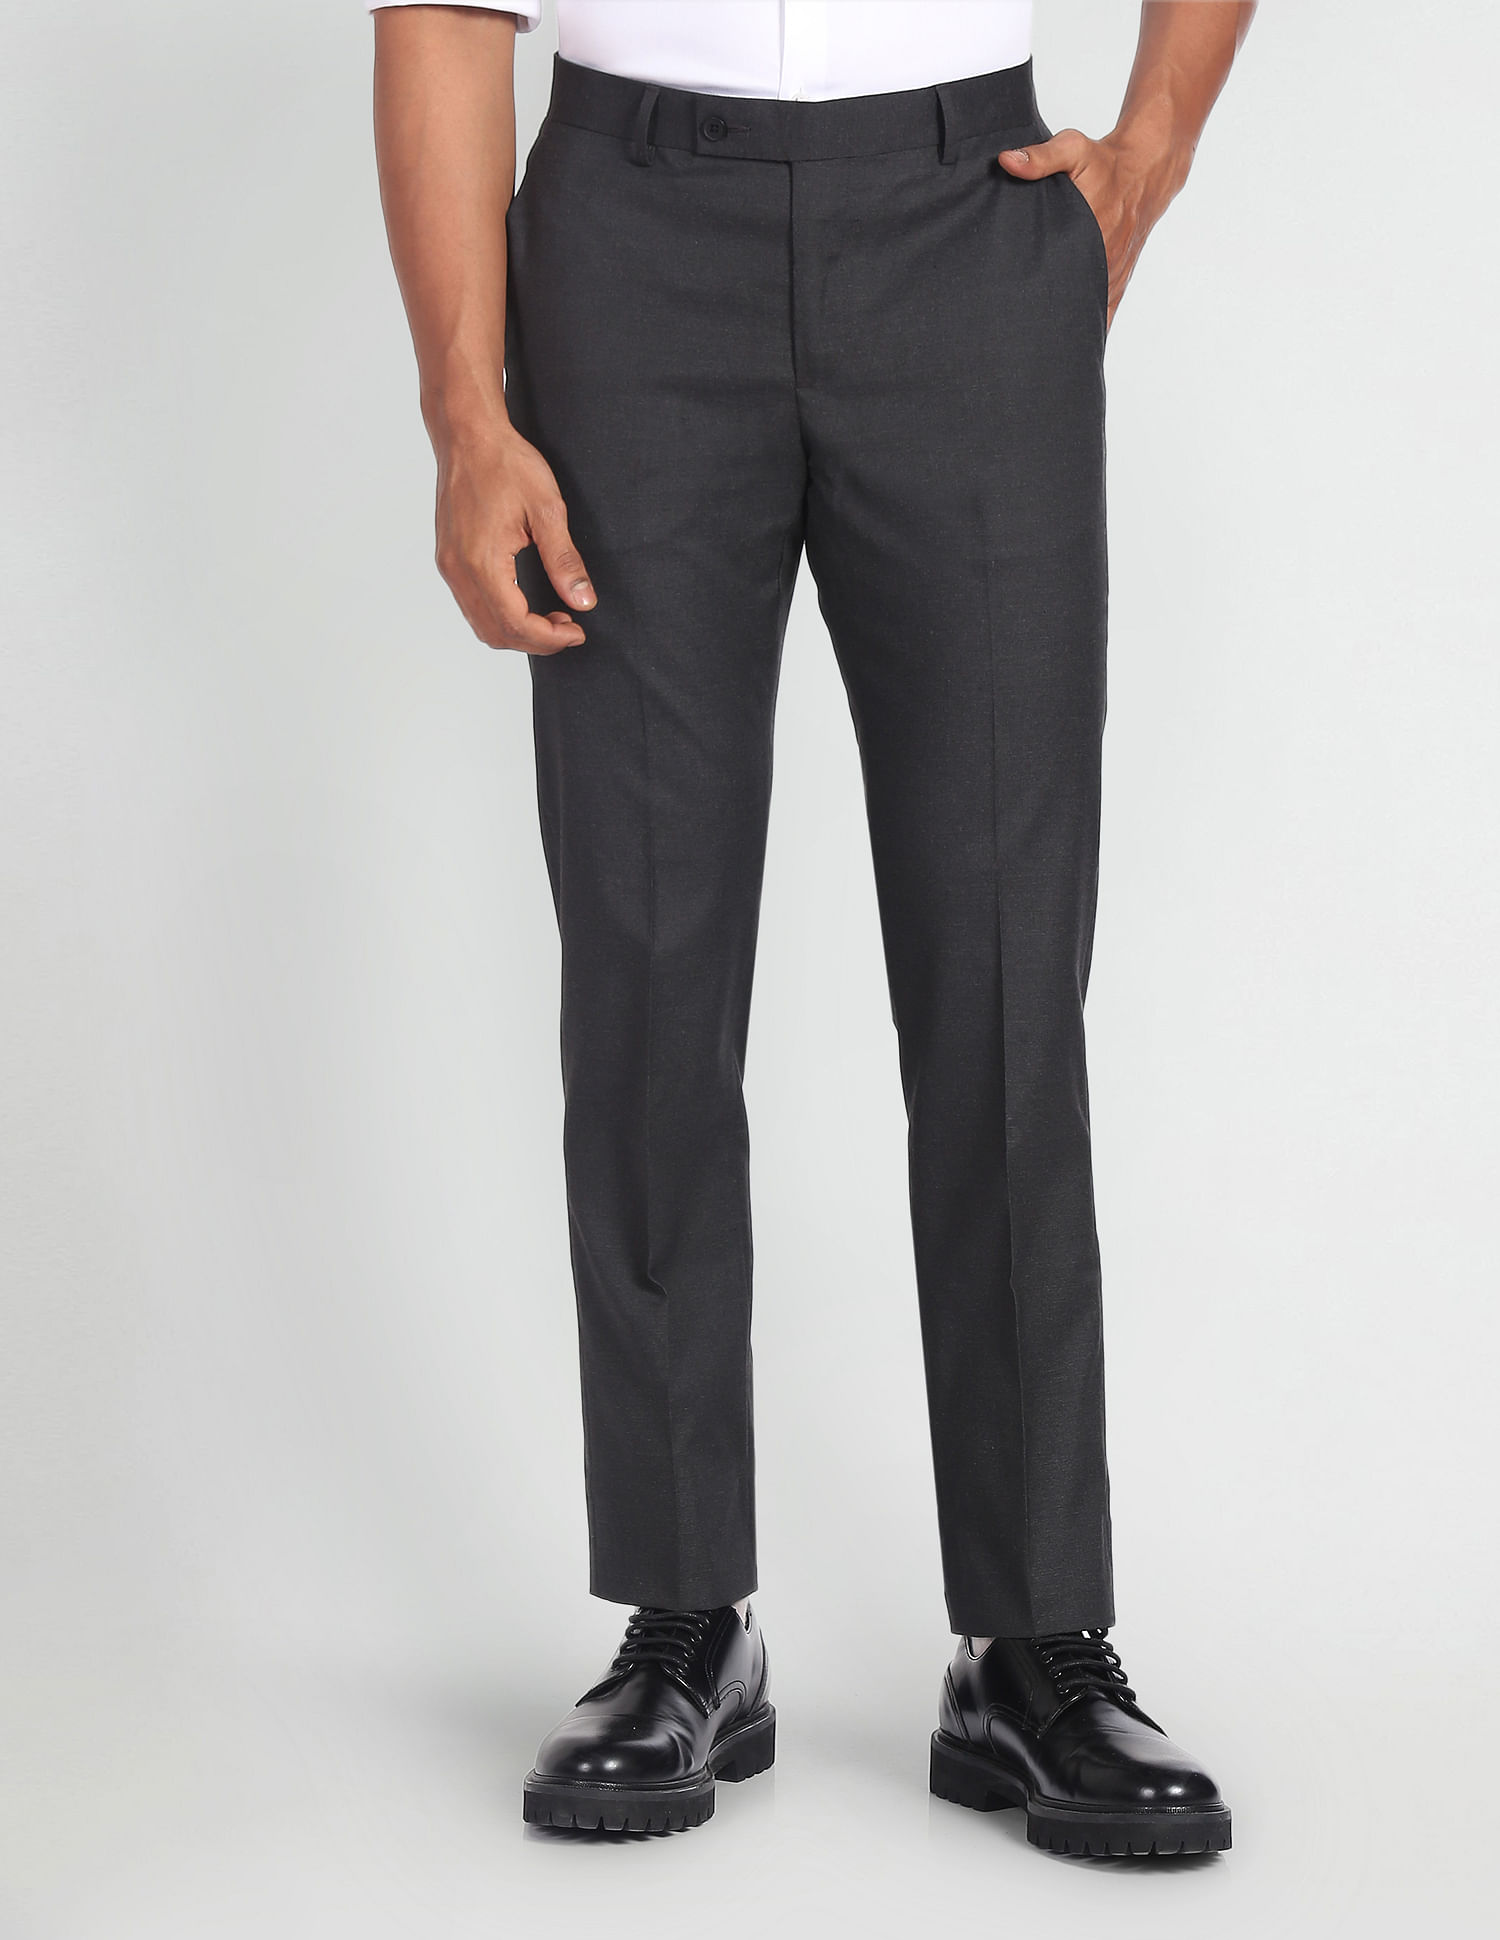 Buy Arrow Twill Stretch Textured Formal Trousers - NNNOW.com